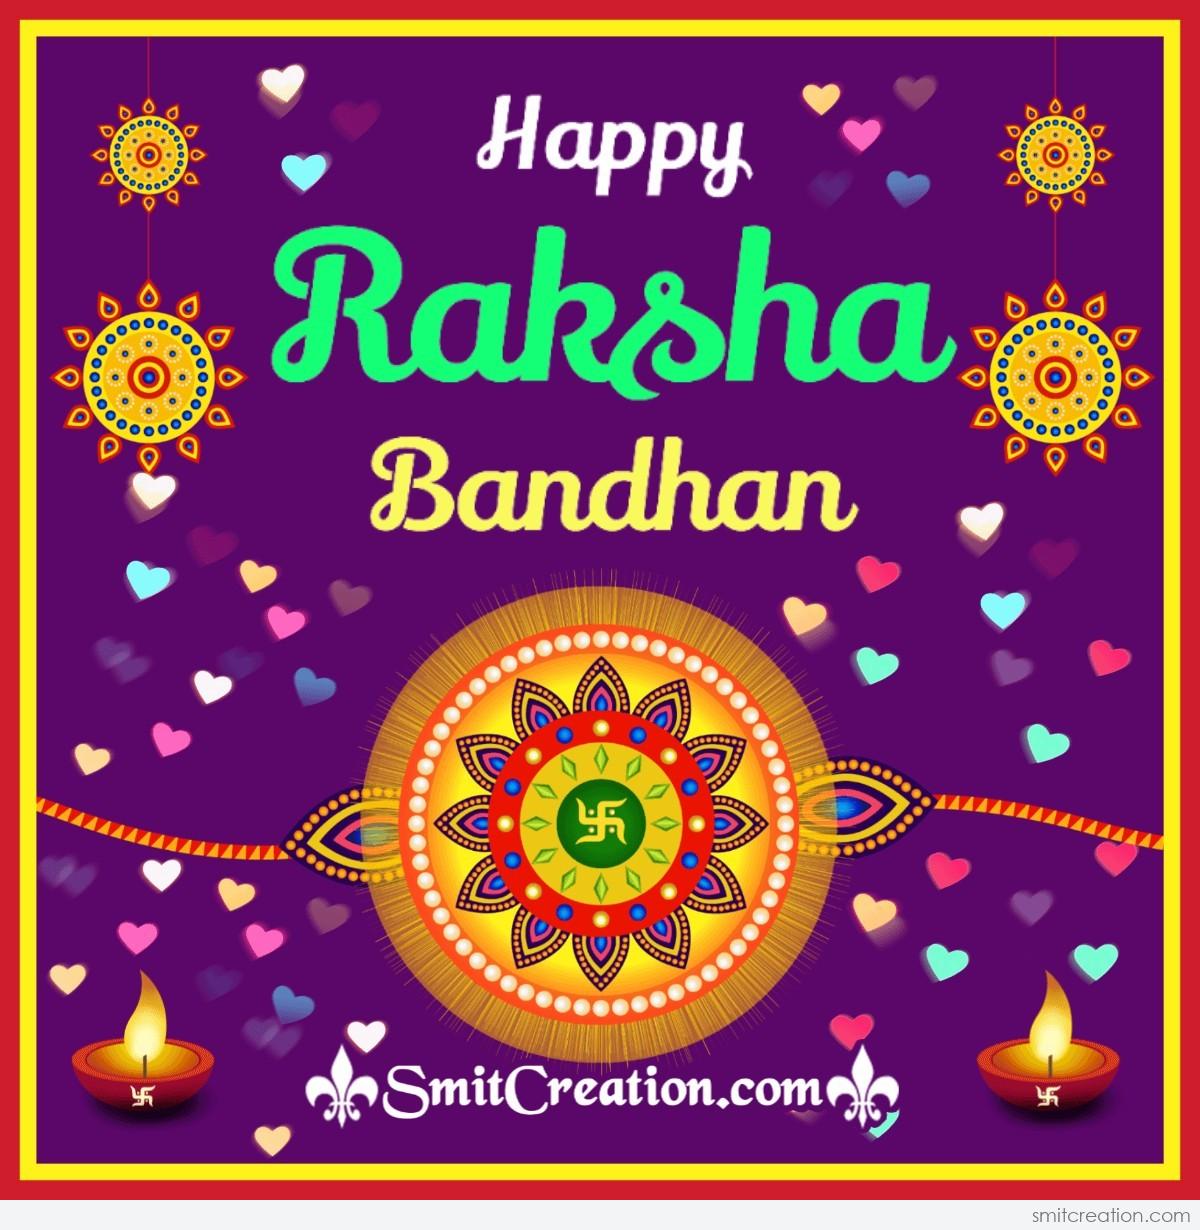 Happy Raksha Bandhan Images - SmitCreation.com